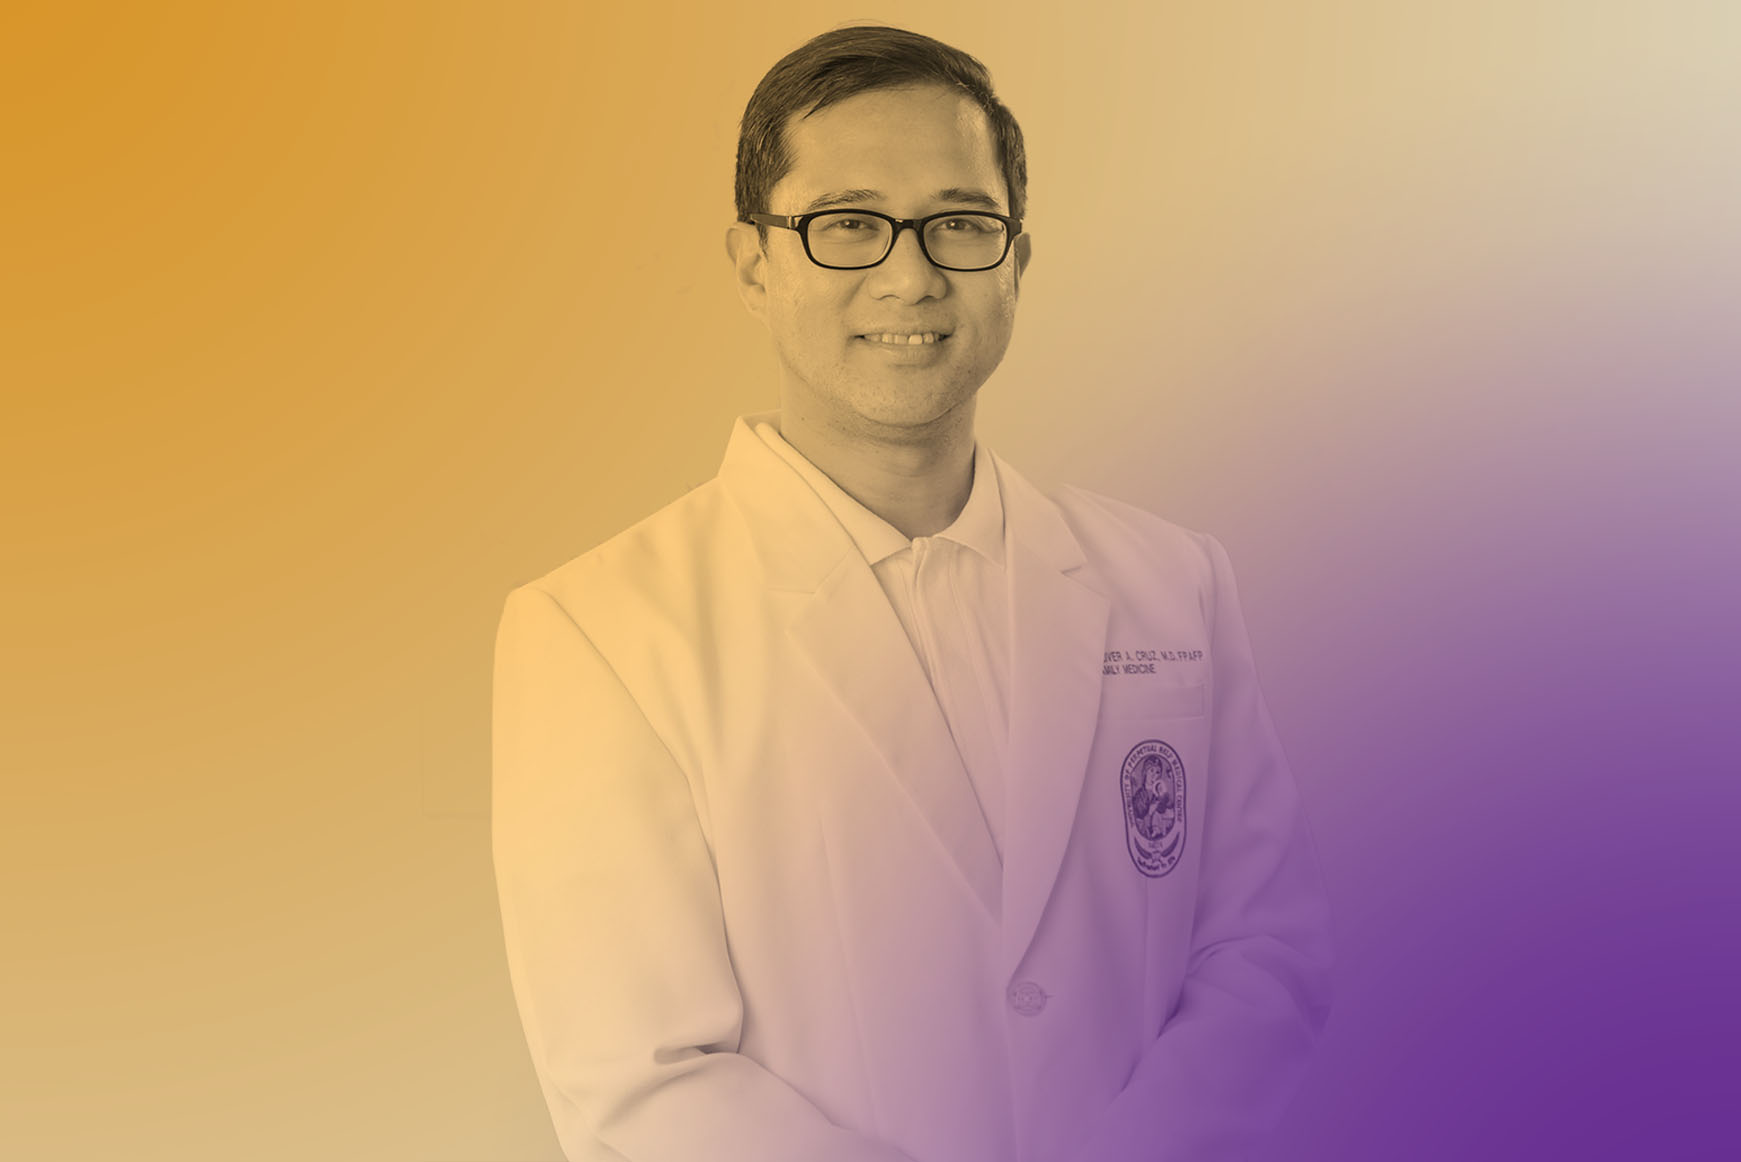  Dr. Raymond Cruz   THE MEDICAL PHILOSOPHER    Read Stories  